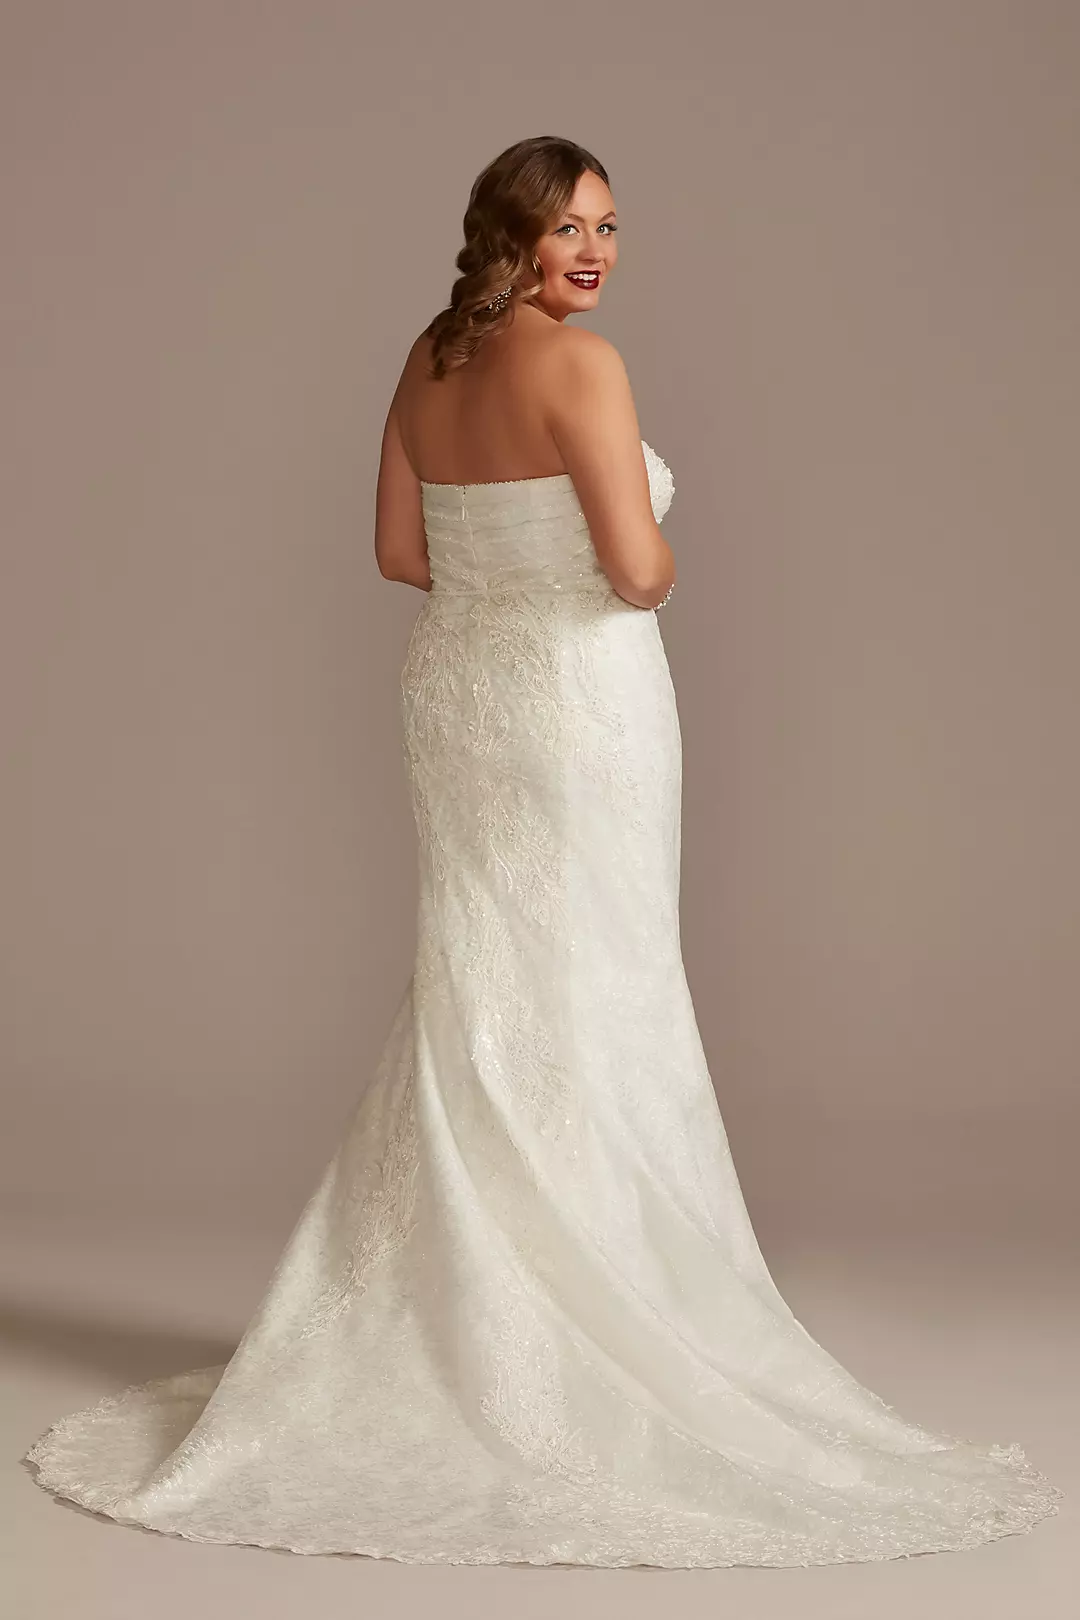 Shirred Lace Strapless Wedding Dress Image 2